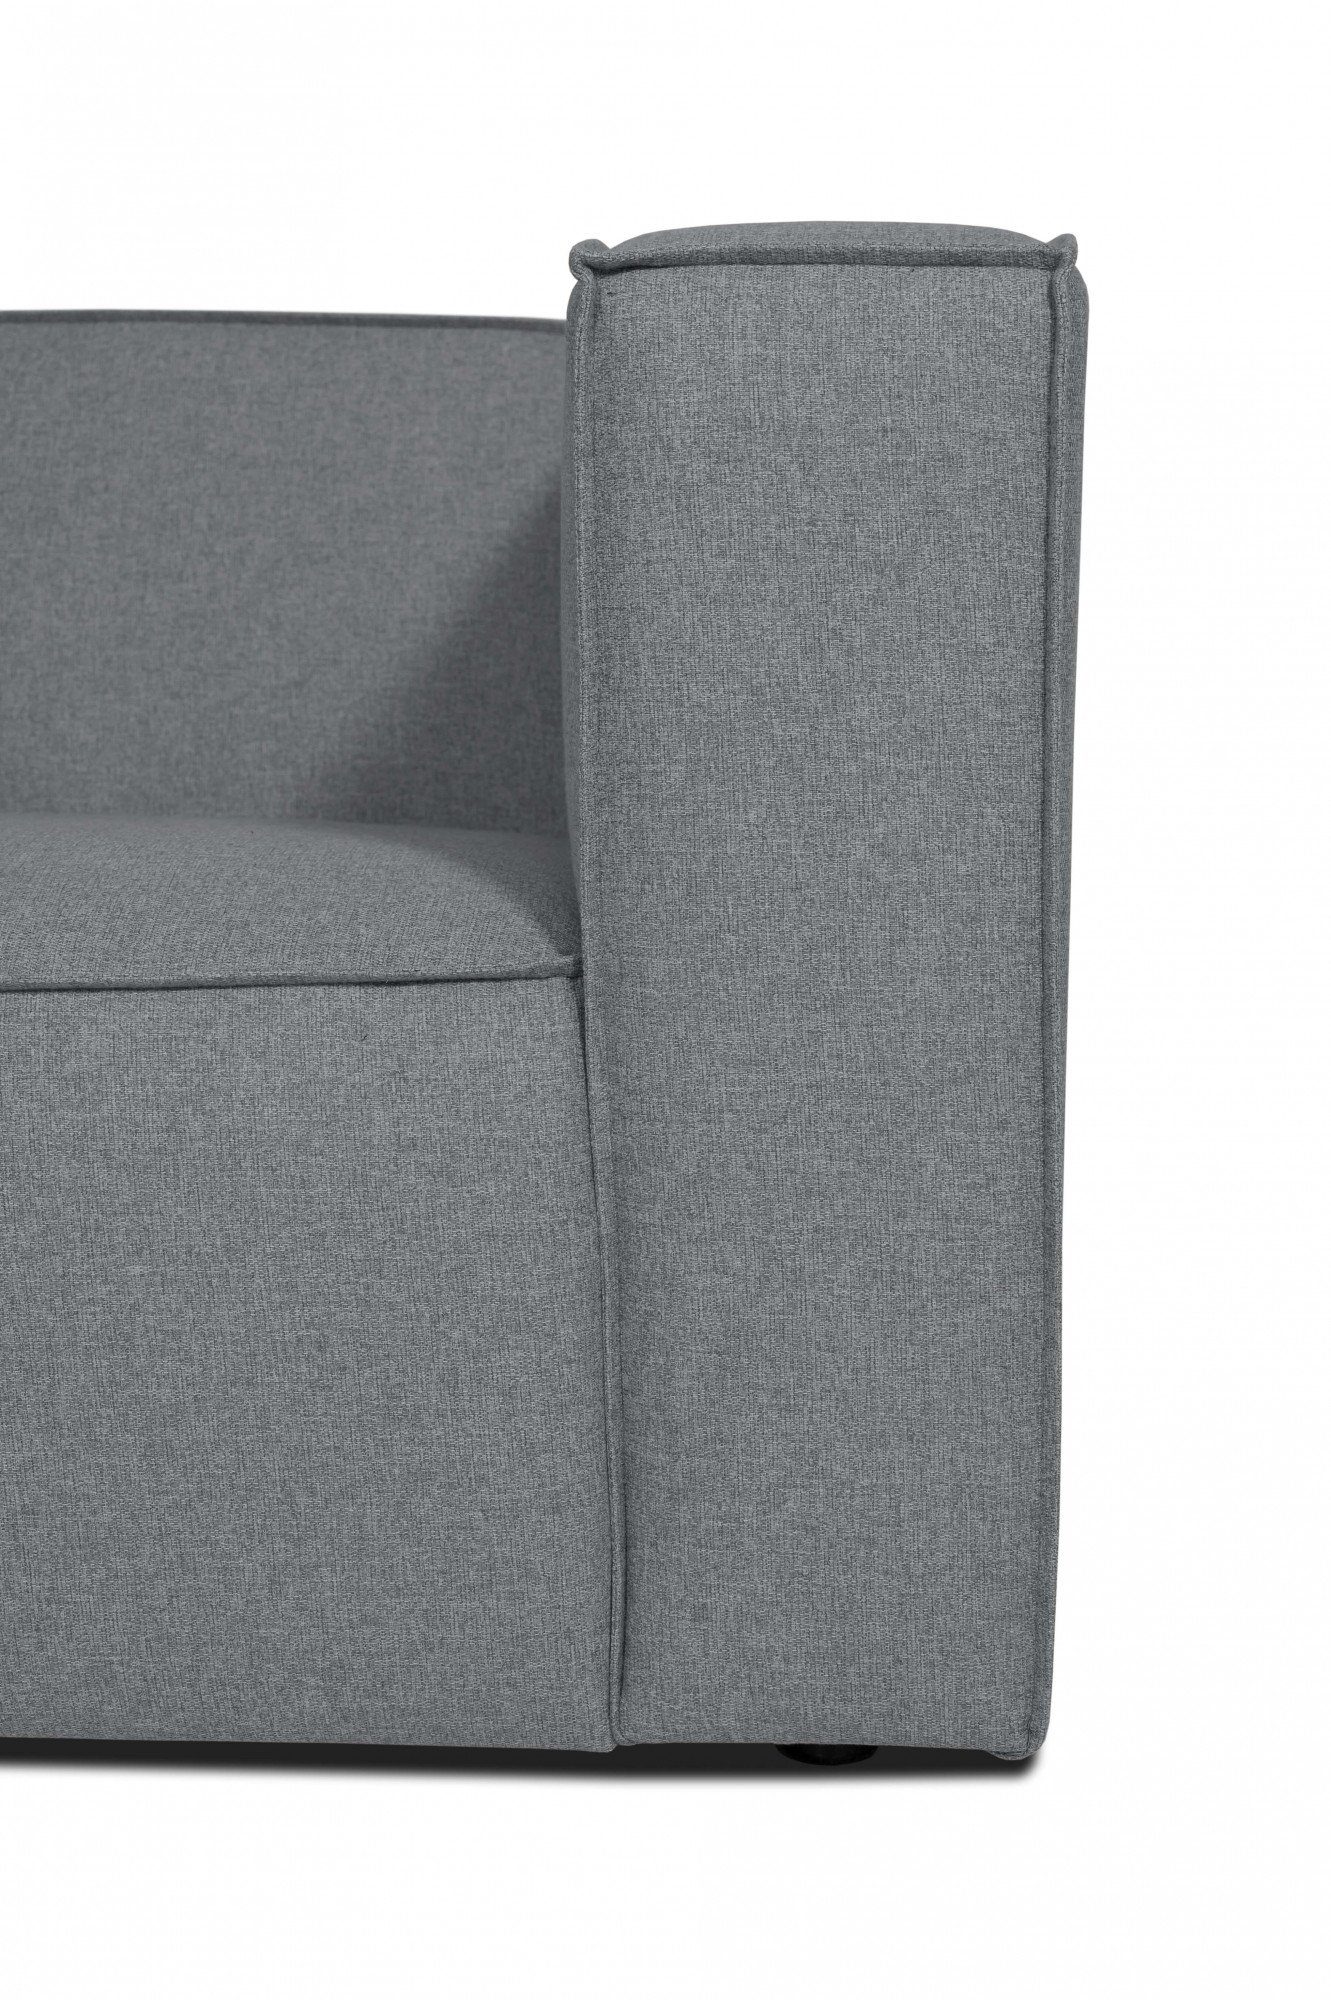 grey tiefe angenehmer Kedernaht, Ecksofa extra andas Dalby, mit light Sitzfläche, Sitzkomfort